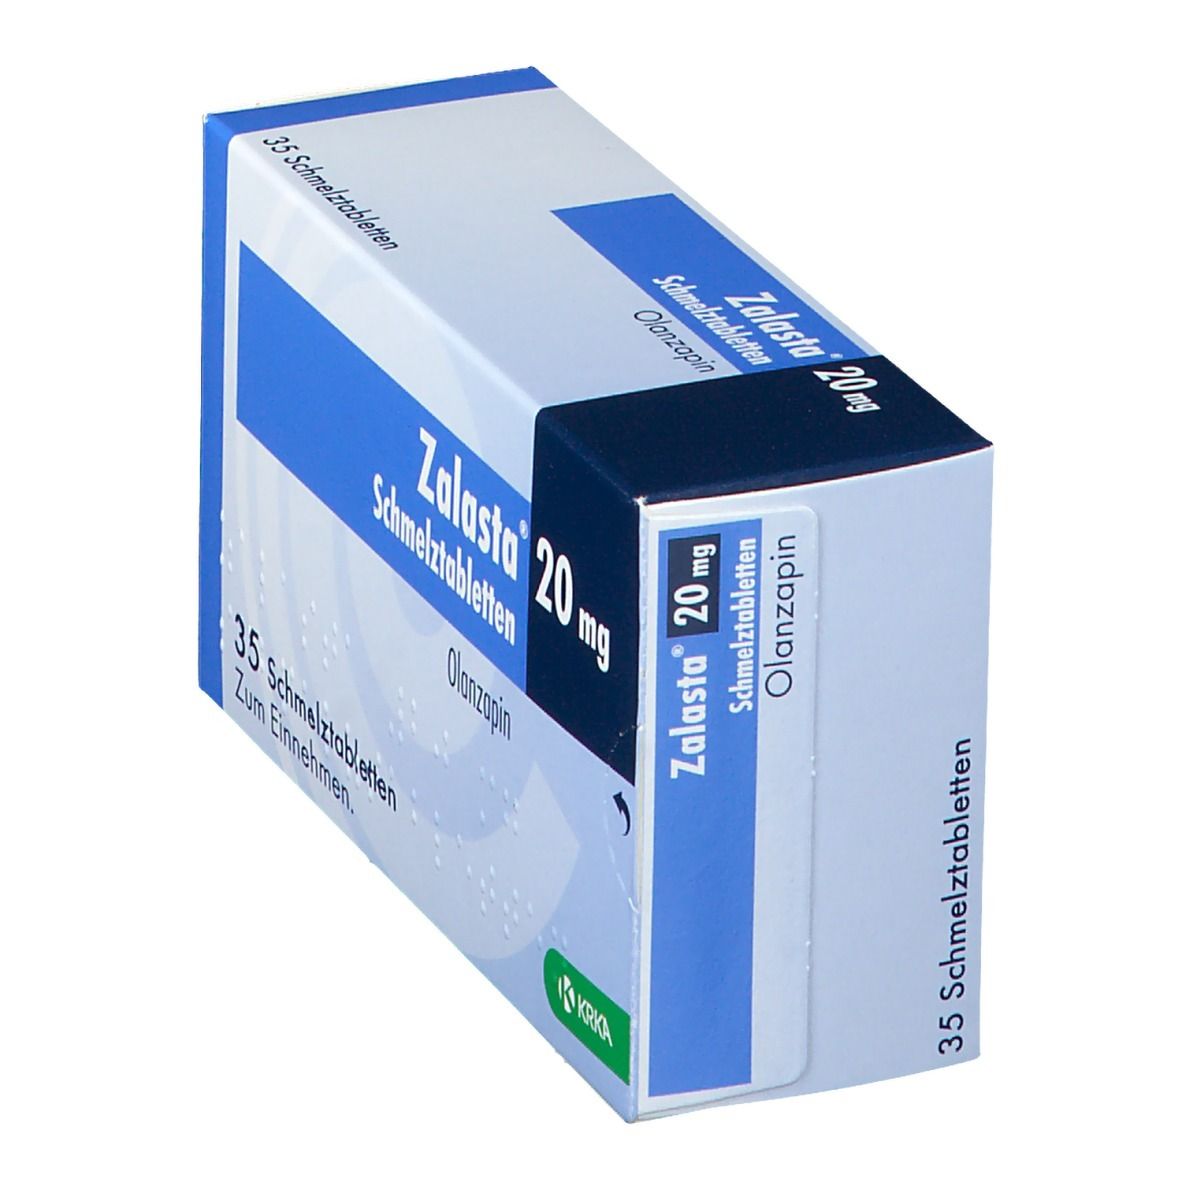 Zalasta® 20 mg